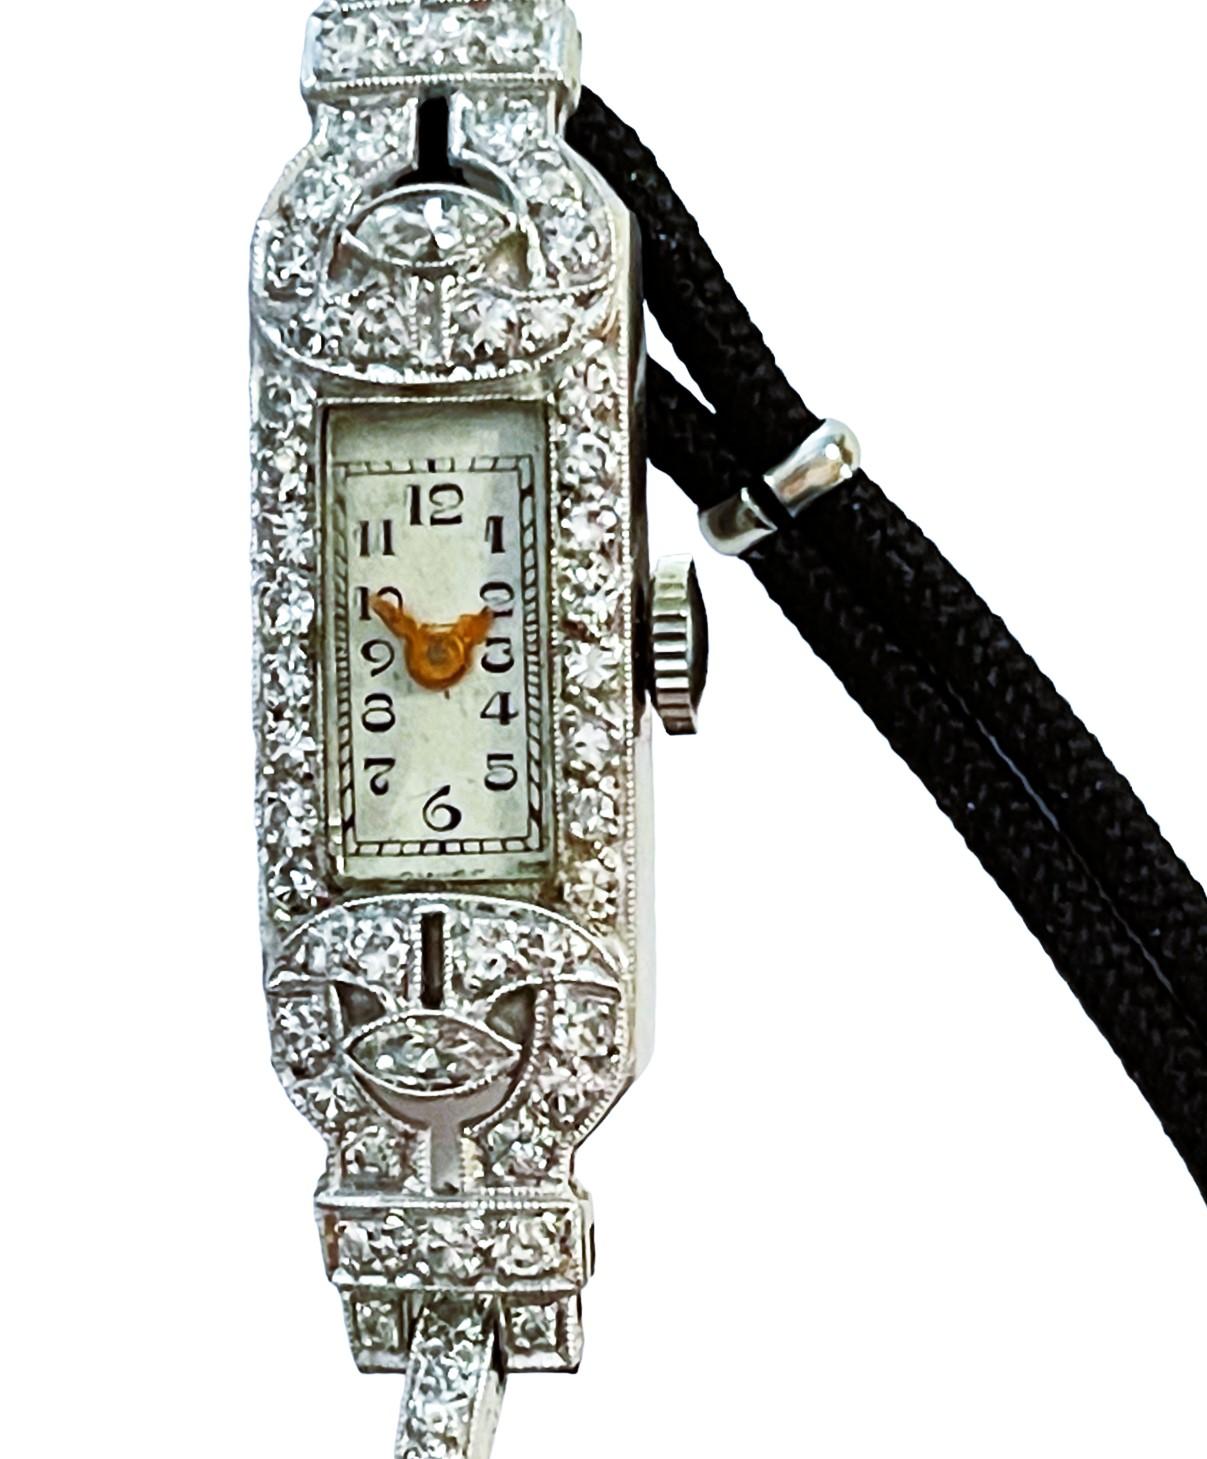 Vintage Platinum Diamond 17 Jewel Acoro Wrist Watch Bracelet Working Condition 3